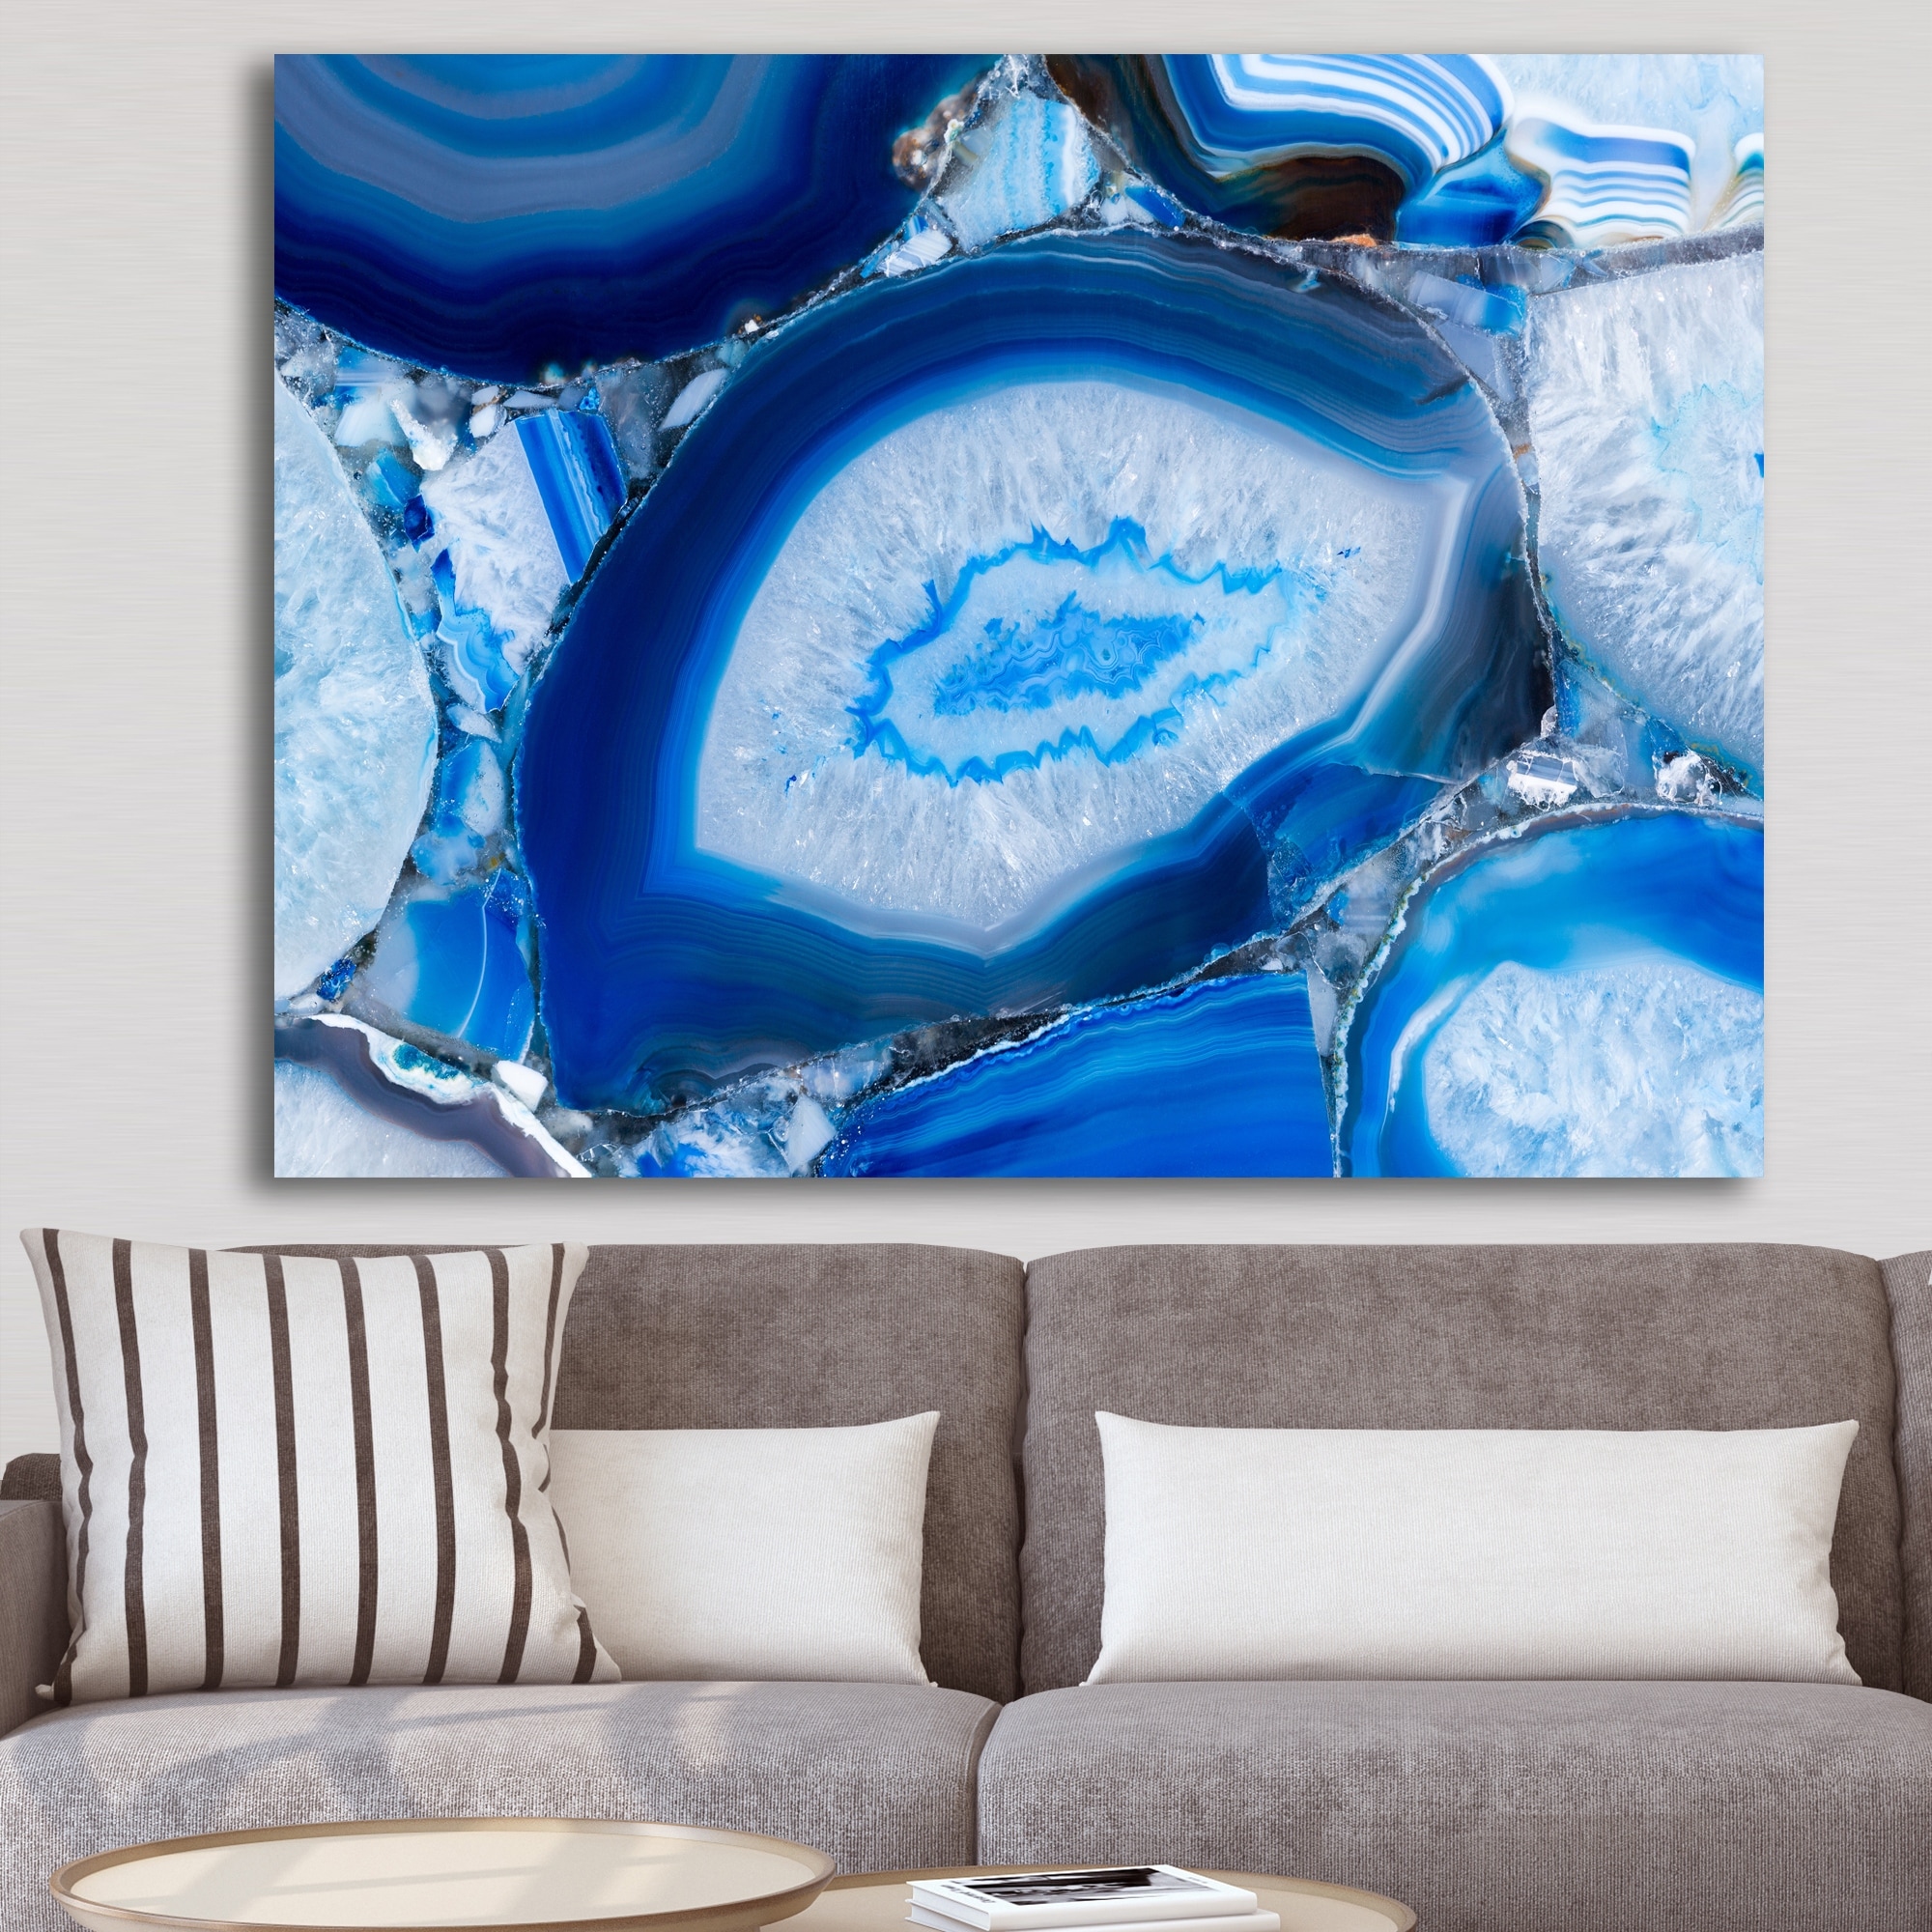 Blue Agate Artwork Wallpapers